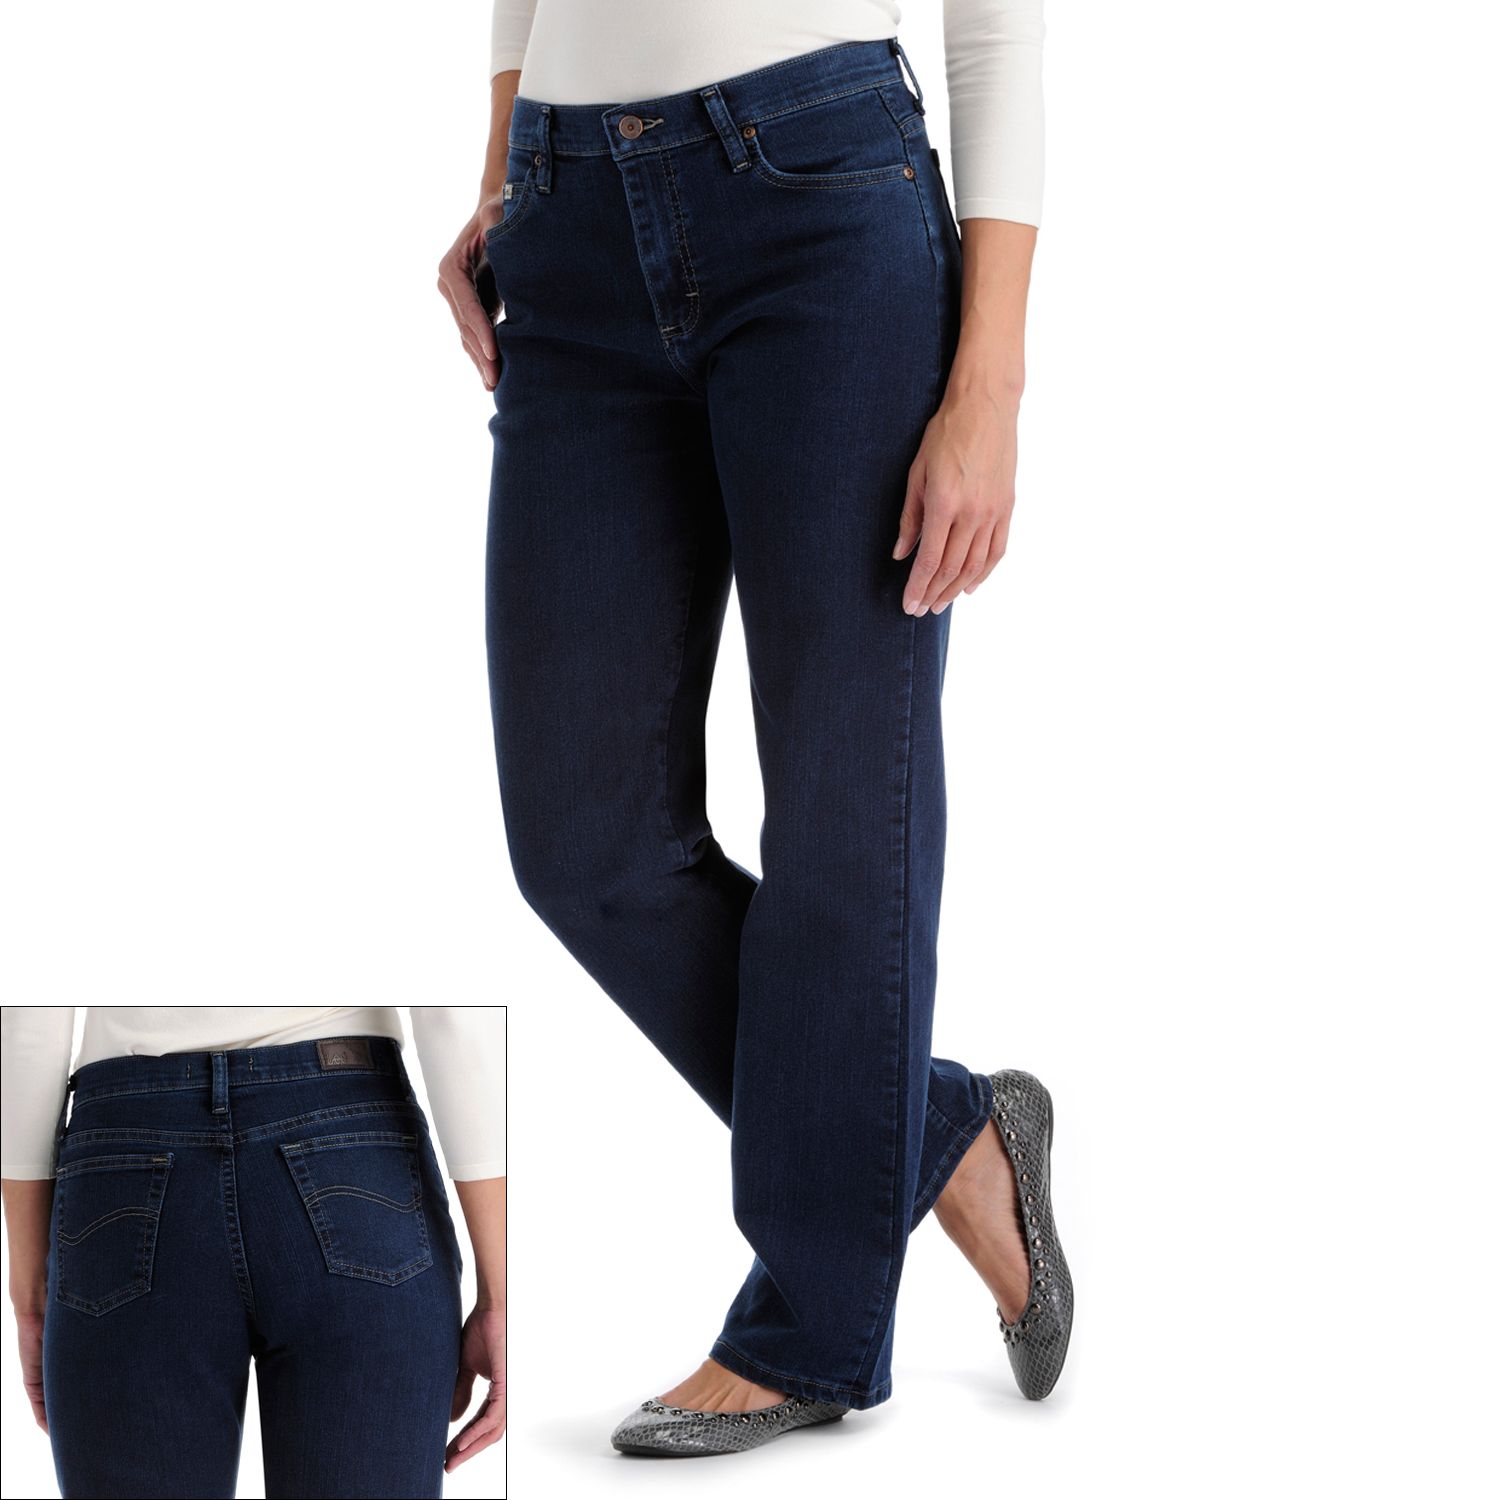 women's lee comfort stretch waistband jeans